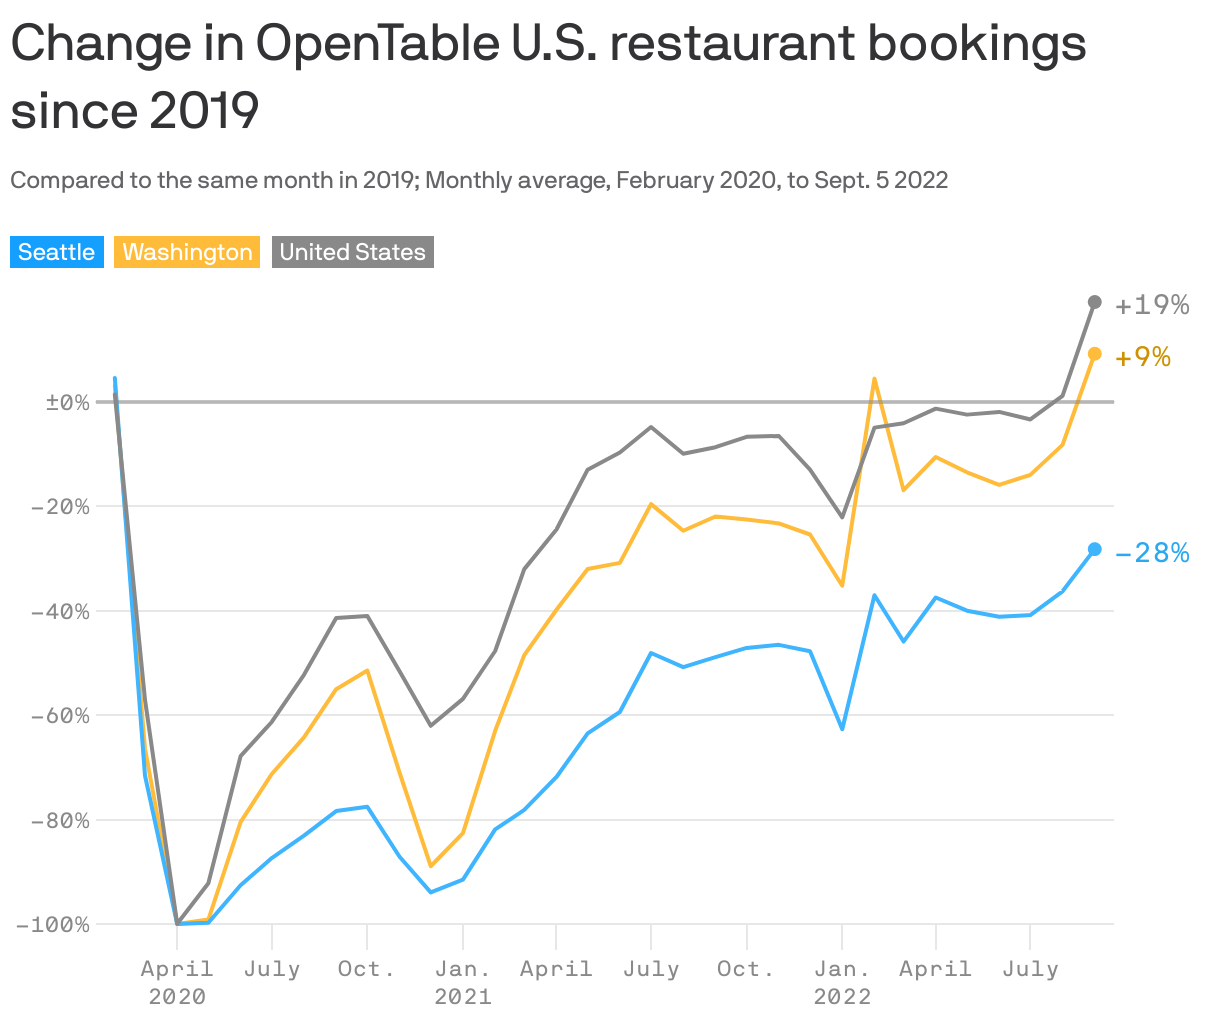 Change in OpenTable U.S. restaurant bookings since 2019